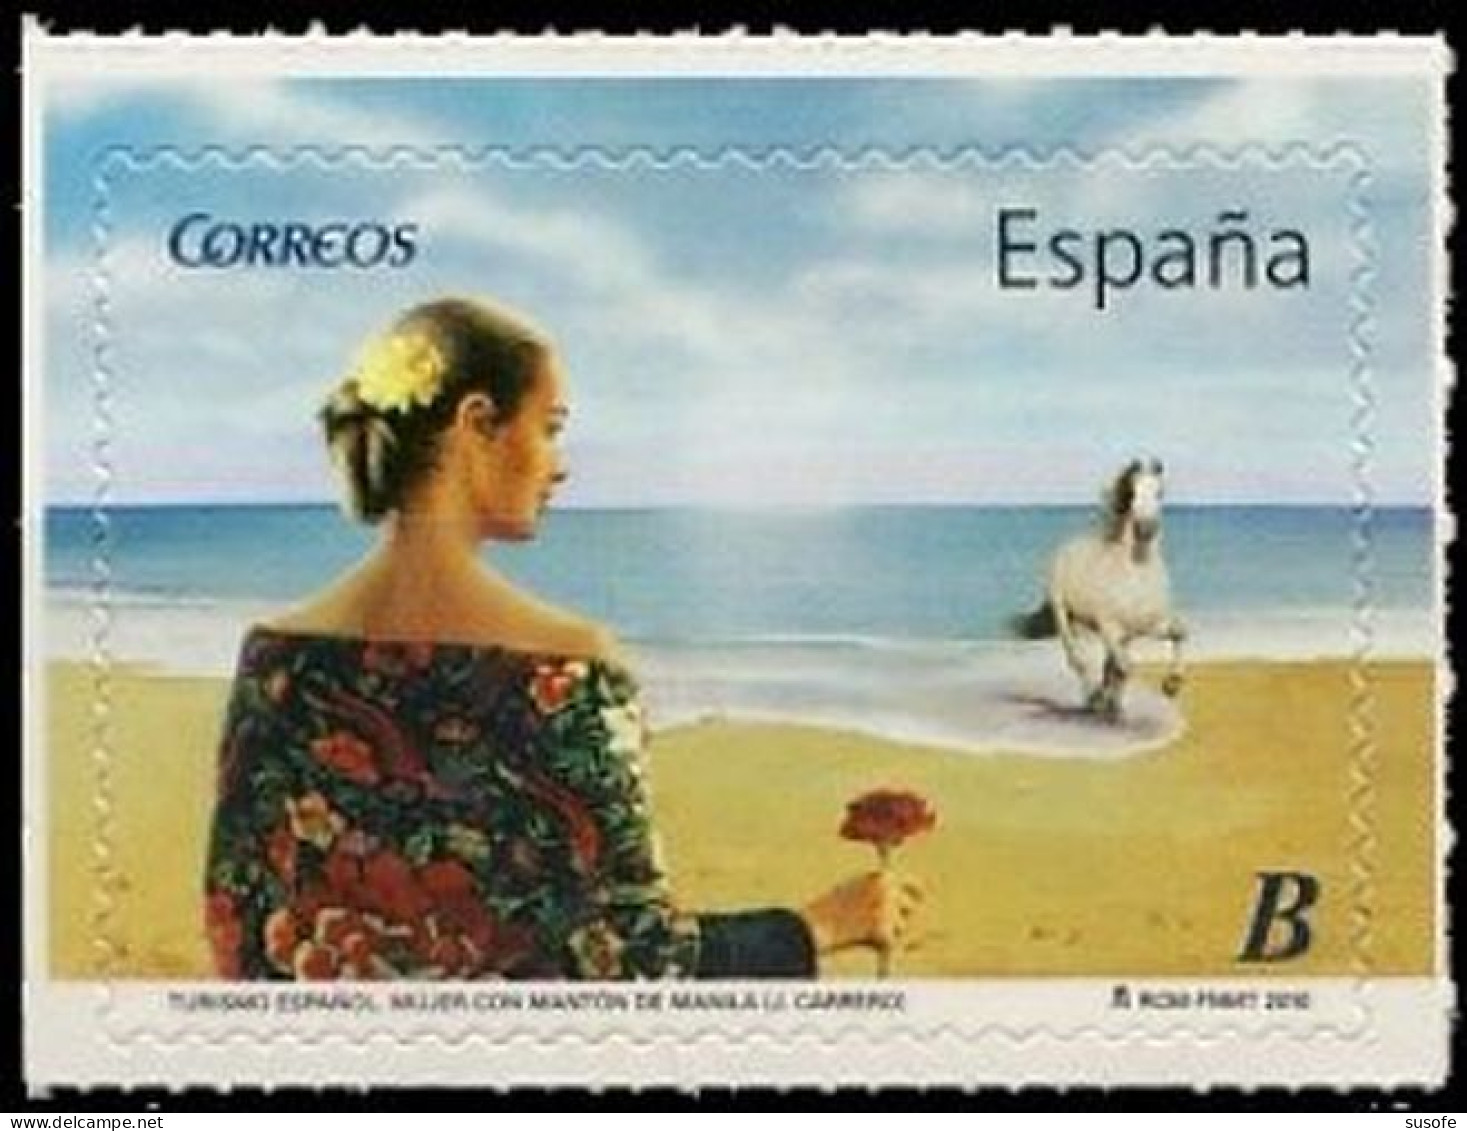 España 2010 Edifil 4532 Sello ** Turismo Mujer Con Mantón De Manila  (J. Carrero) Spain Stamps Timbre Espagne Briefmarke - Nuevos